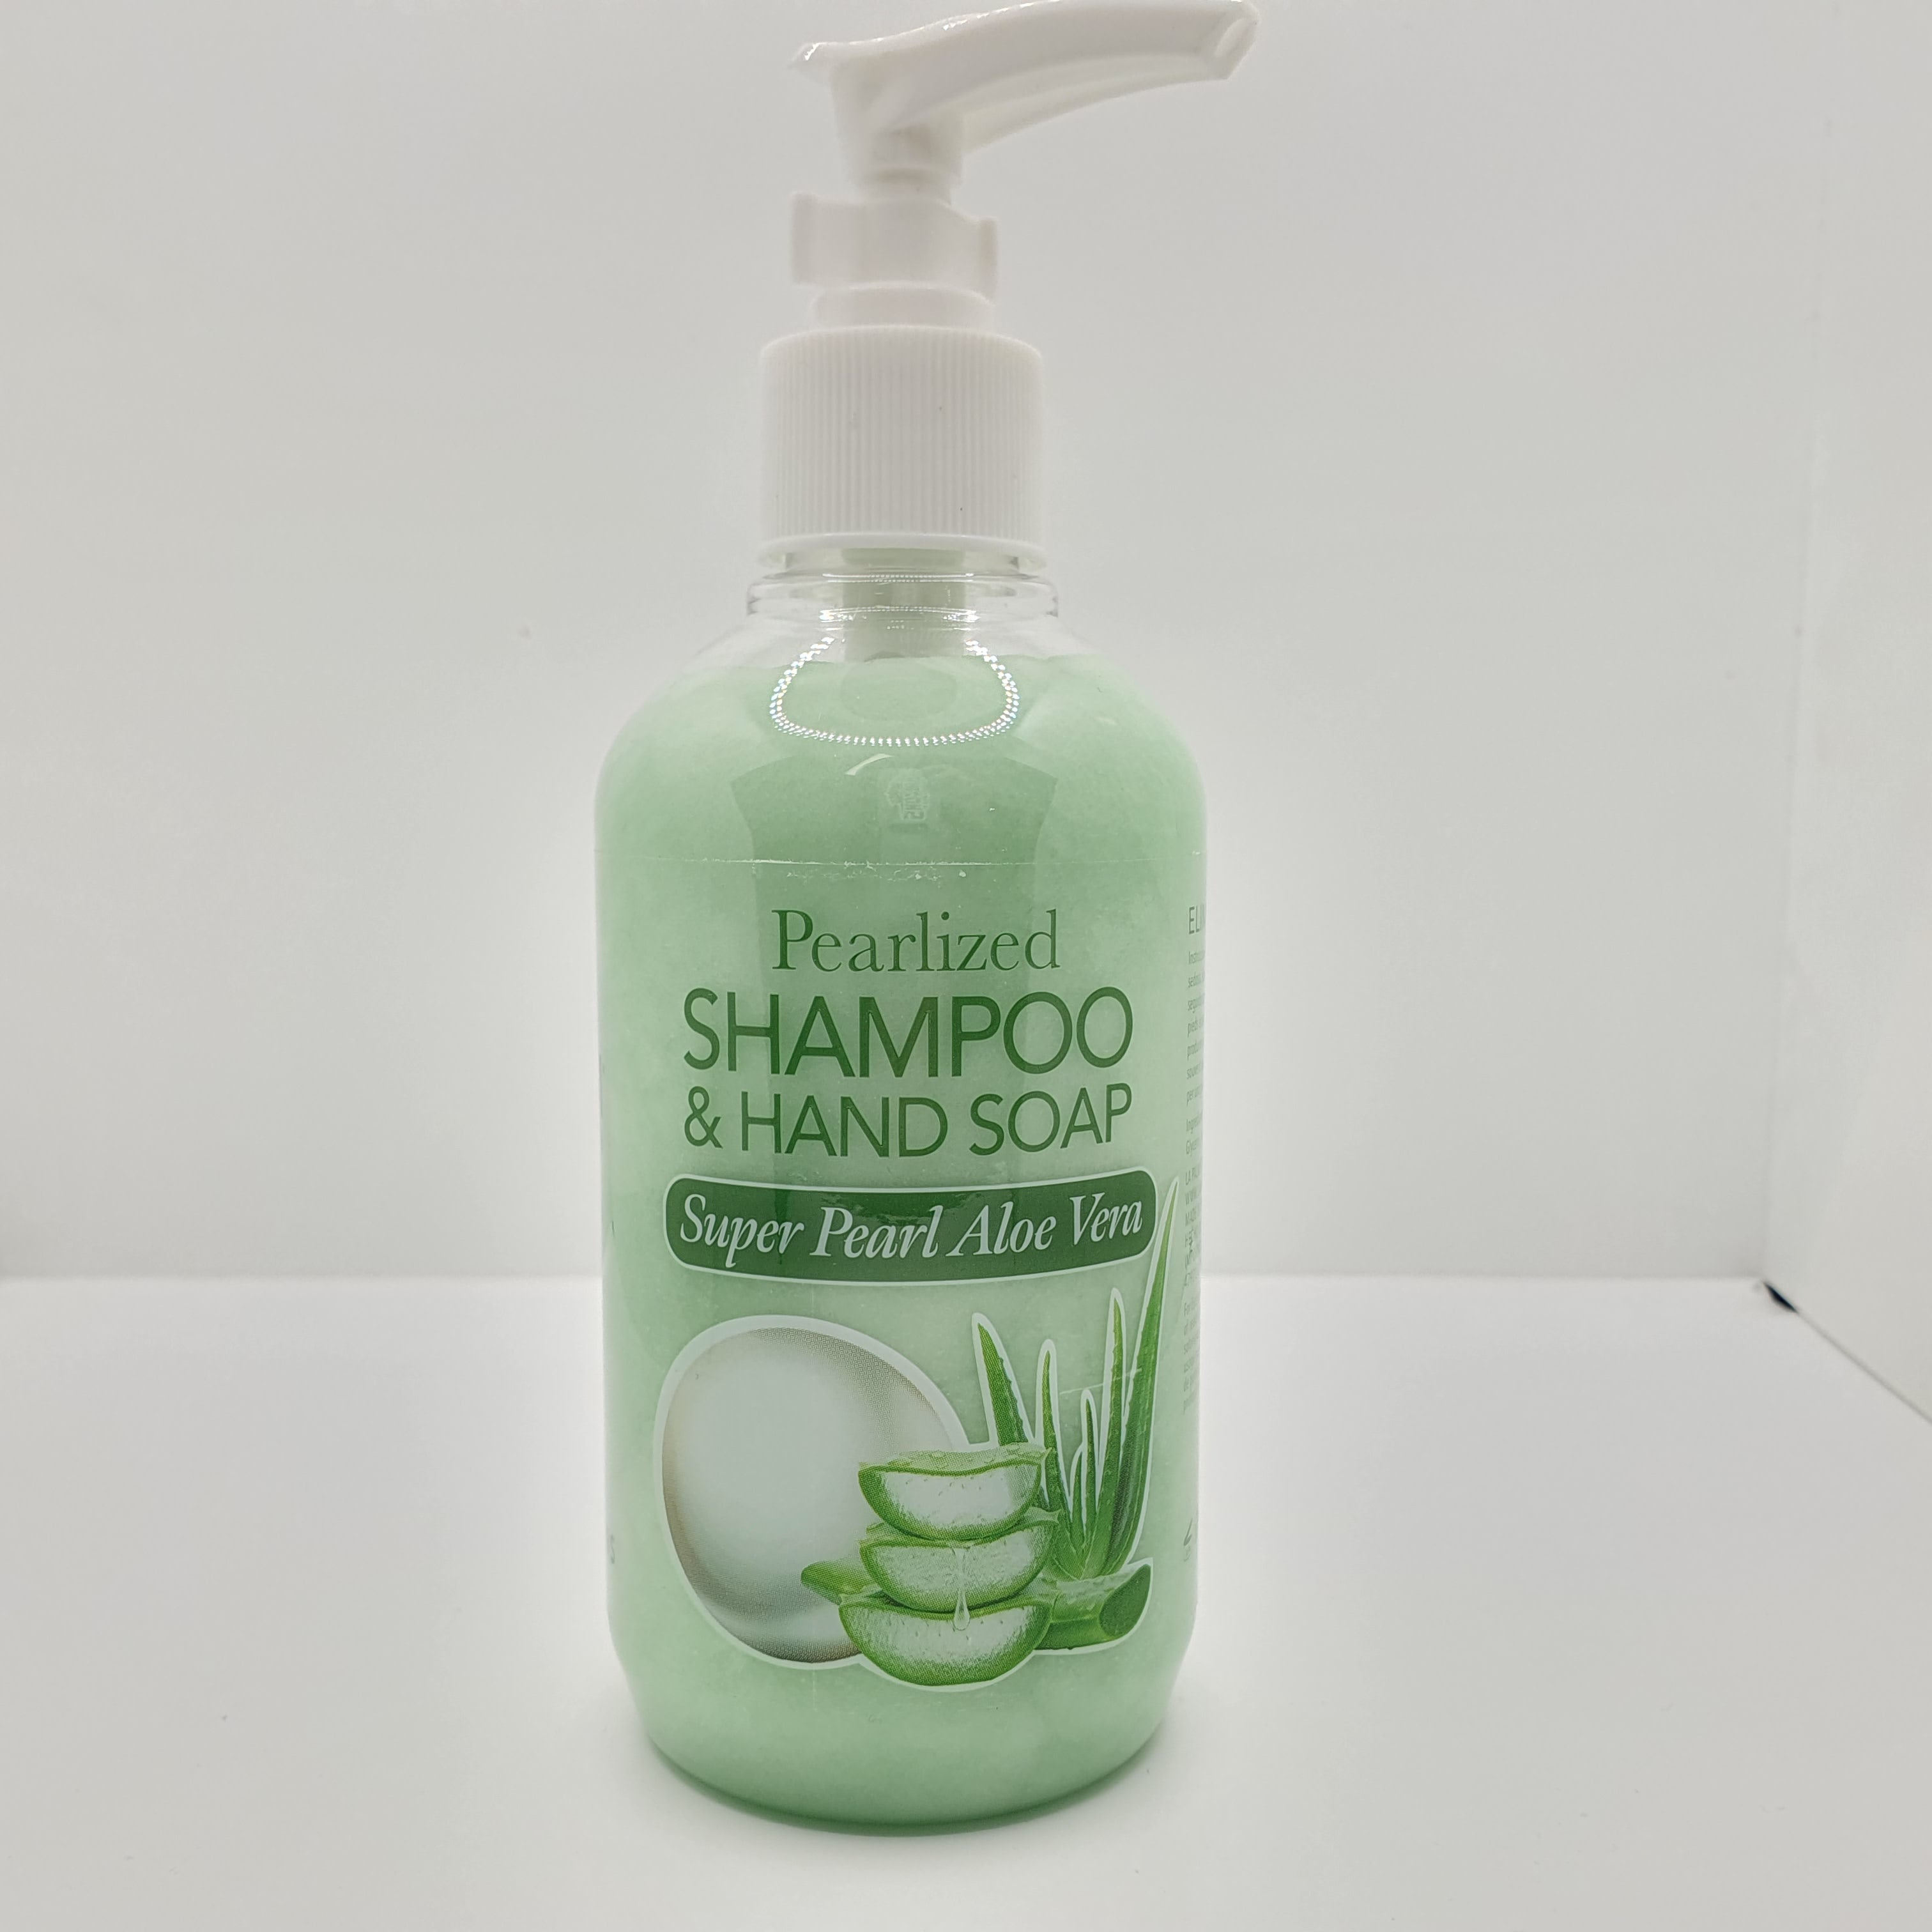 LAPALM SHAMPOO & HAND SOAP - SUPER PEARL ALOE VERA - 8 OZ